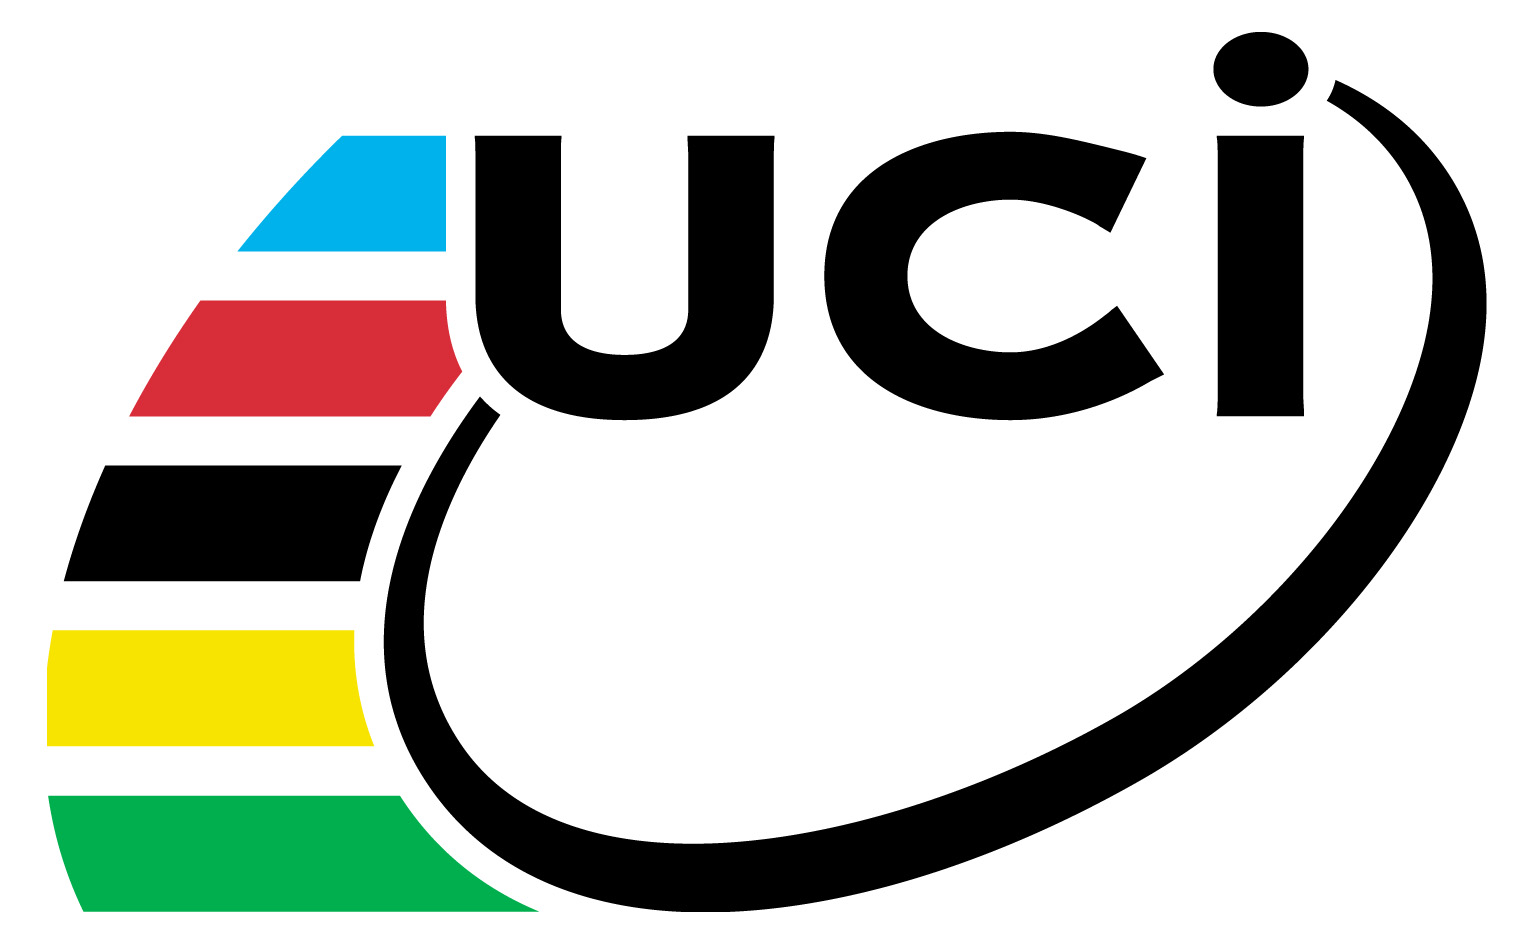 Union Ciclista Internacional